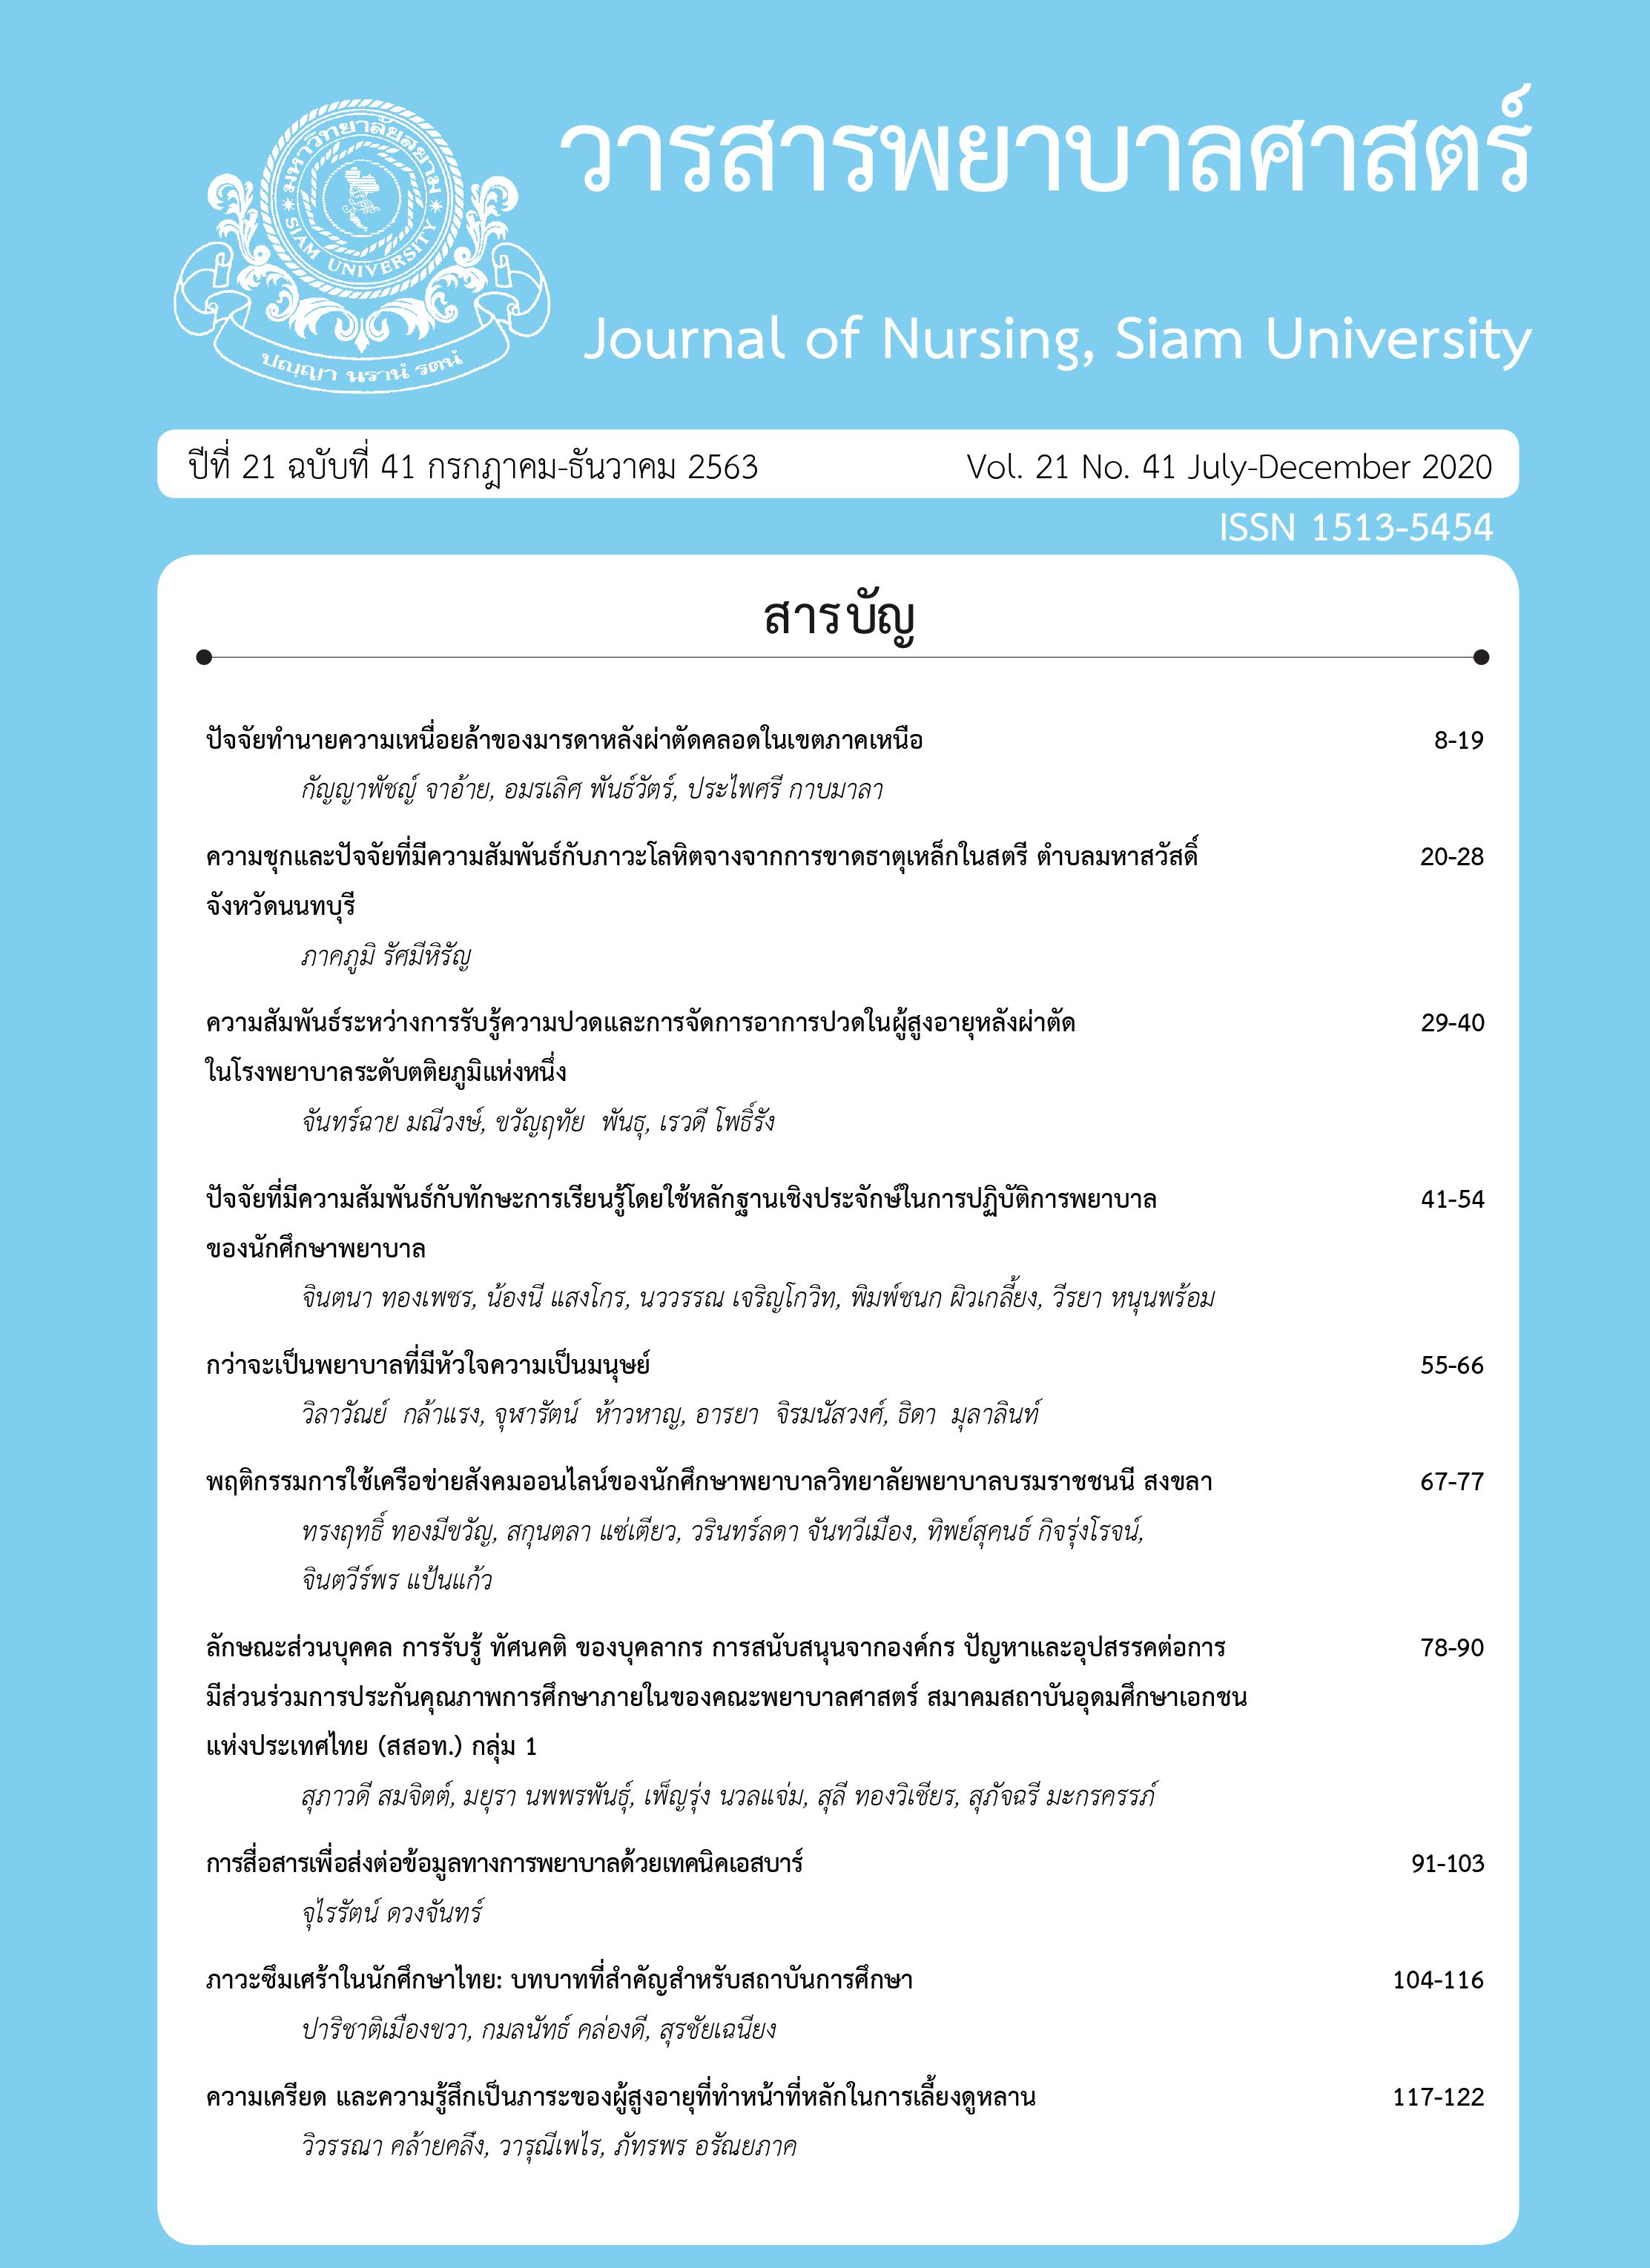 					View Vol. 21 No. 41 (2020): Journal of Nursing Siam University (July - December)
				